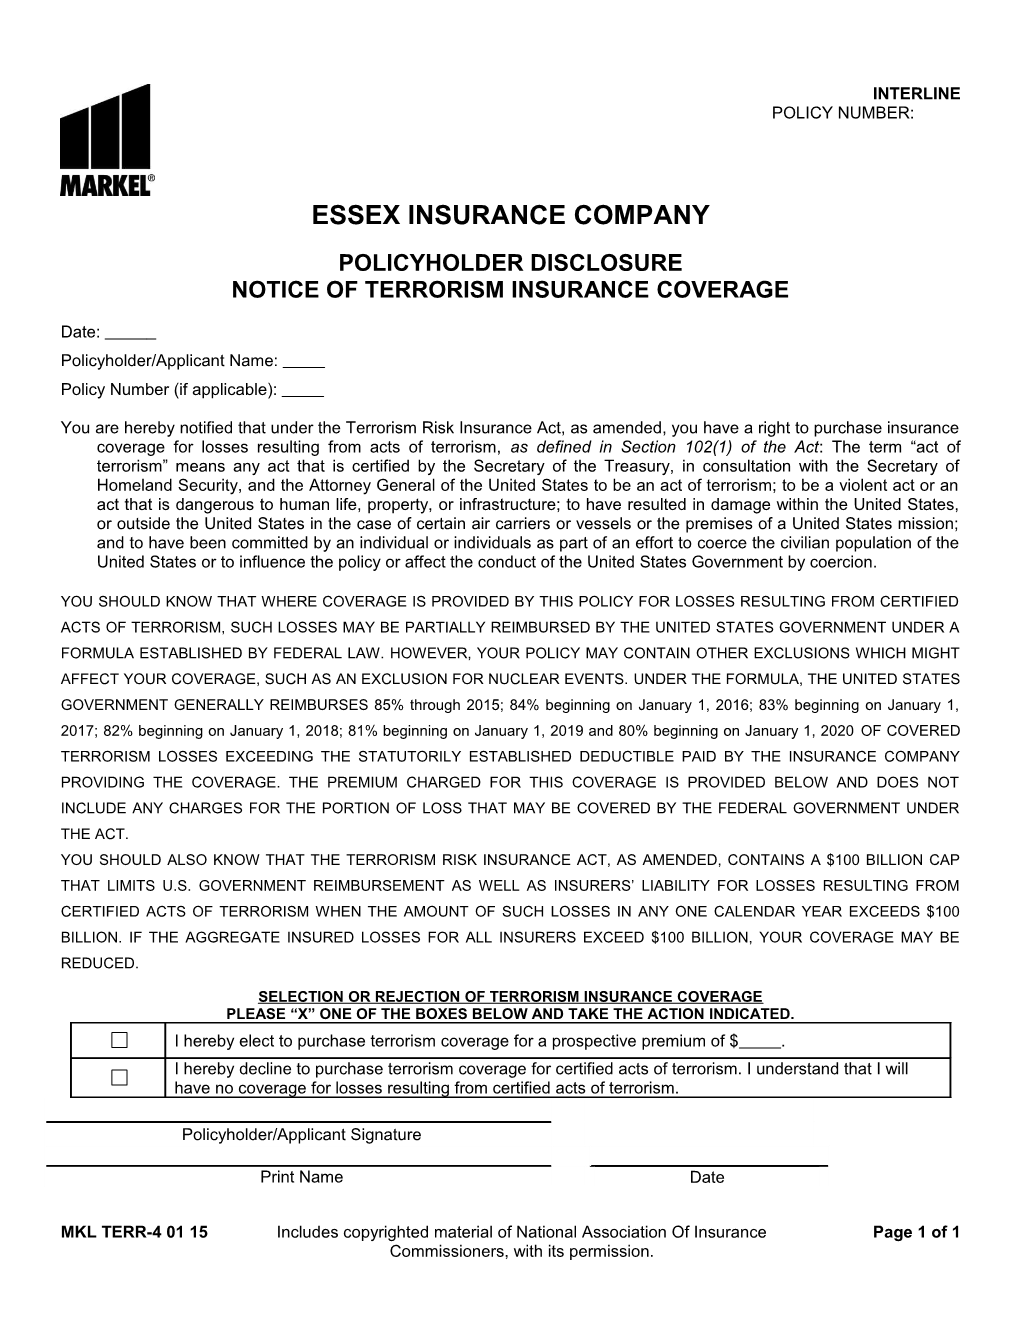 Essex Insurance Company